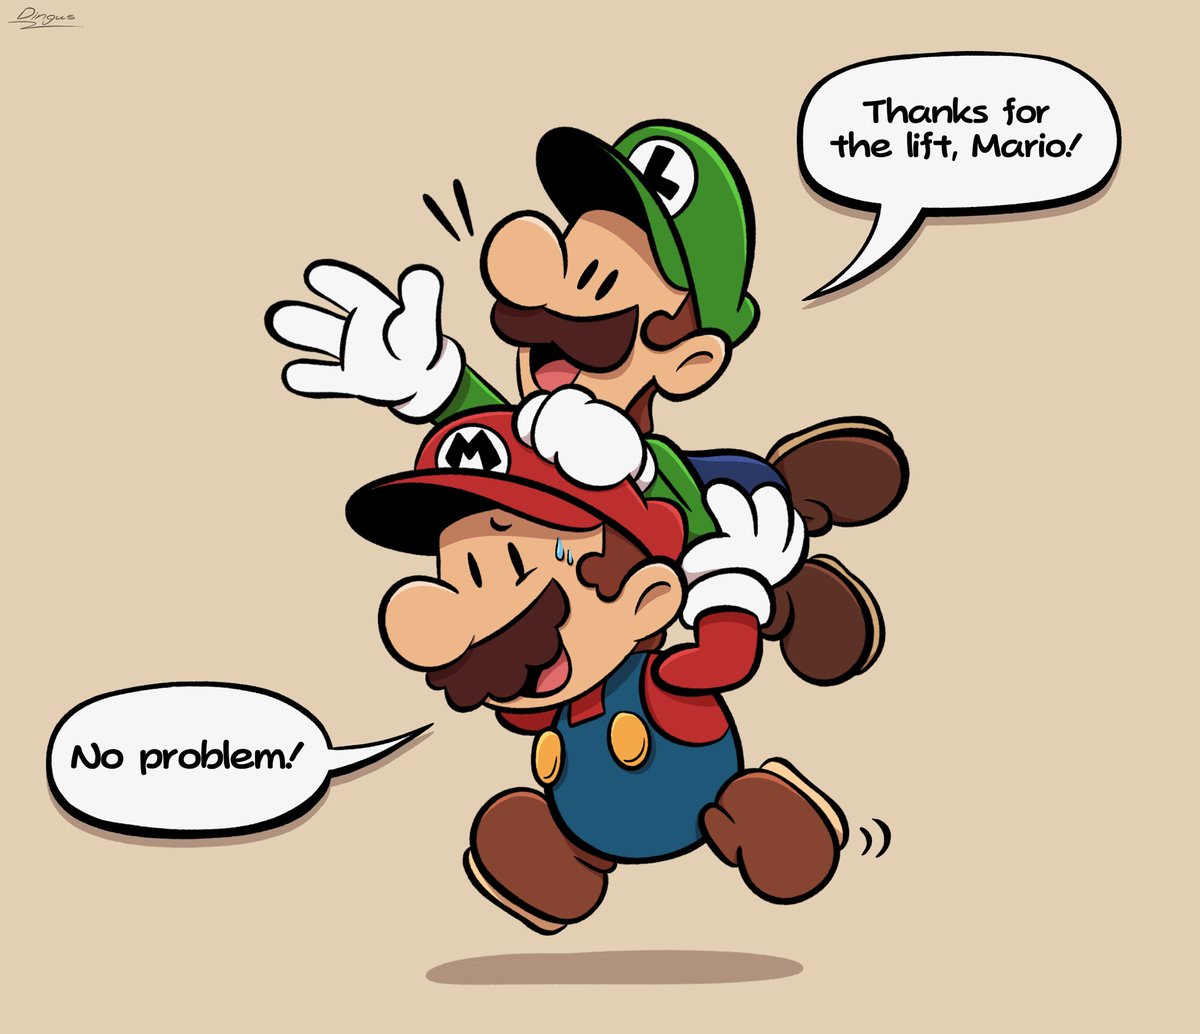 Always willing to lend a hand 🌟

#PaperMario #Nintendo #Mario #Luigi 